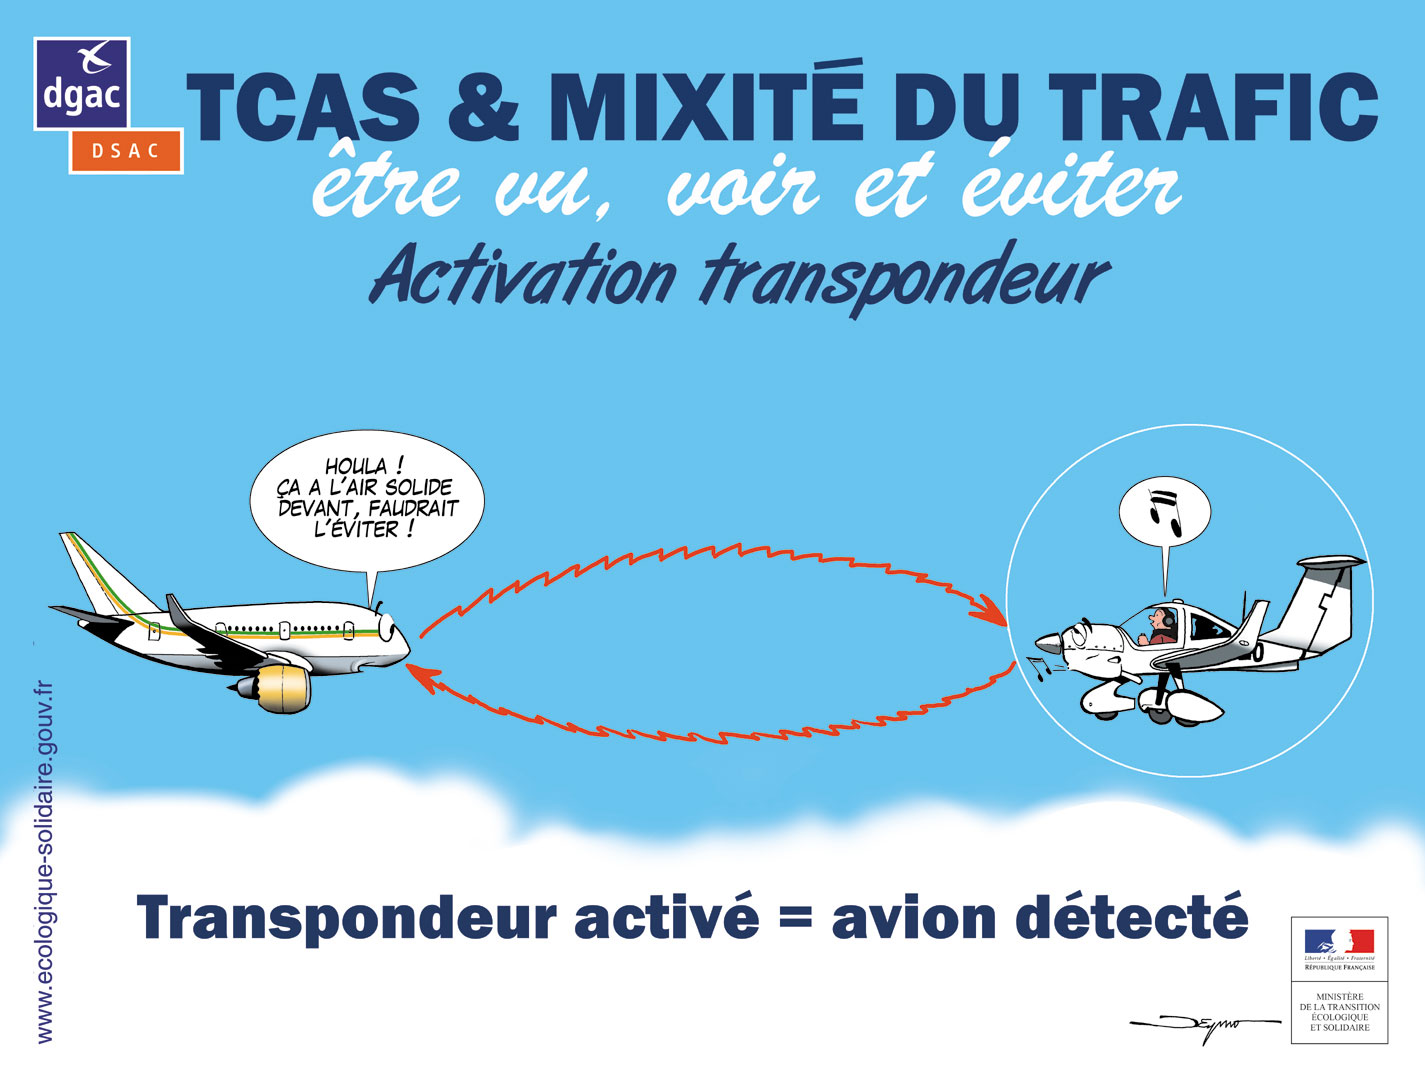 Activation transpondeur